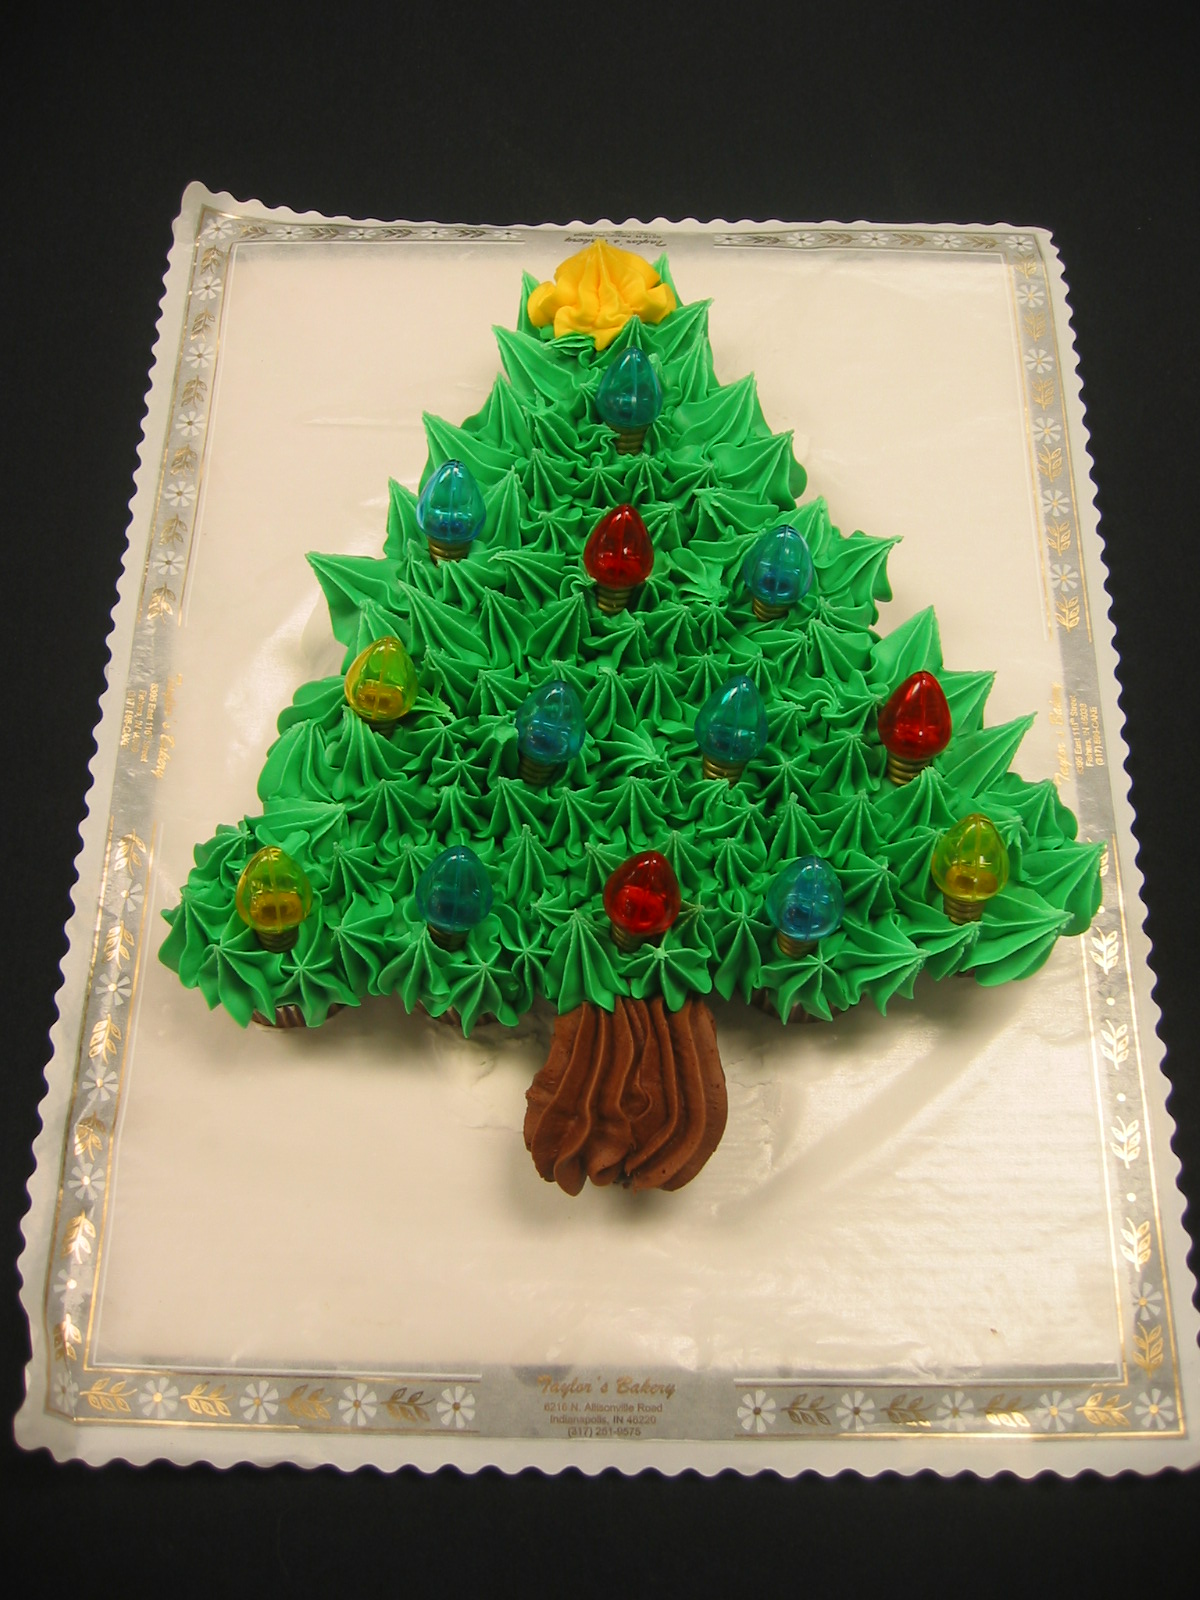 http://www.taylorsbakery.com/wordpress/wp-content/uploads/2011/11/Cupcake-Tree-Pull-Apart.jpg